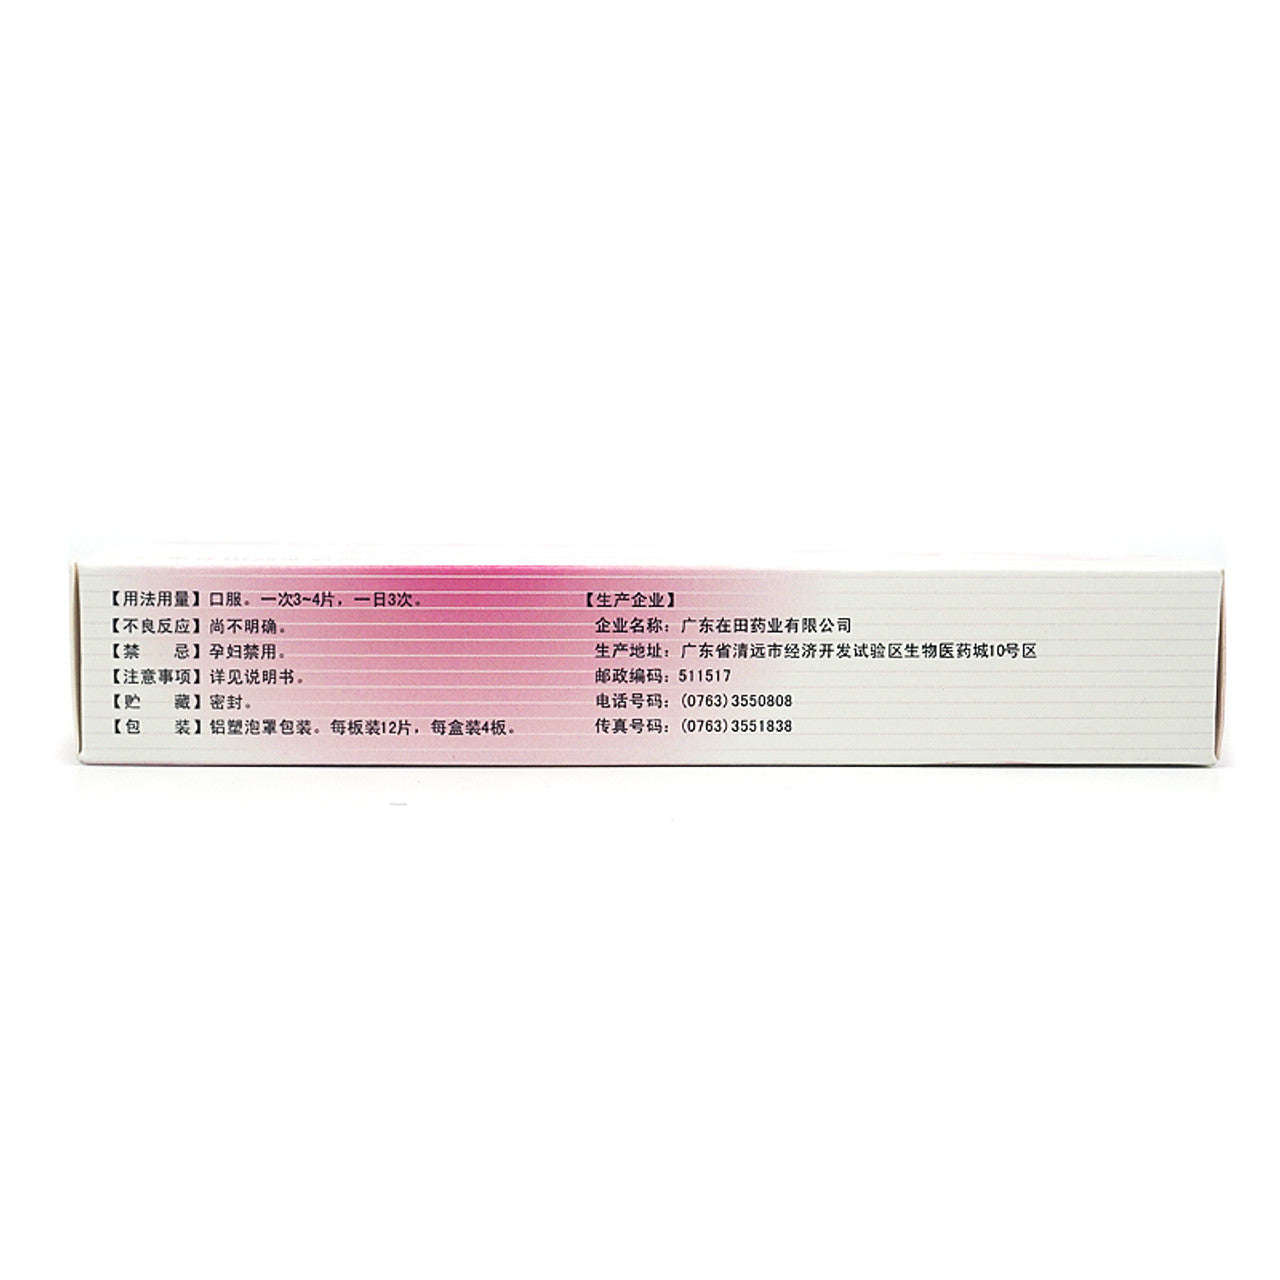 China Herb. Brand Taihuoxin. KUNFUKANG PIAN or Kun Fu Kang Pian or KUNFUKANGPIAN or Kun Fu Kang Tablets or Kunfukang Tablets for Abnormal Vaginal Discharge.